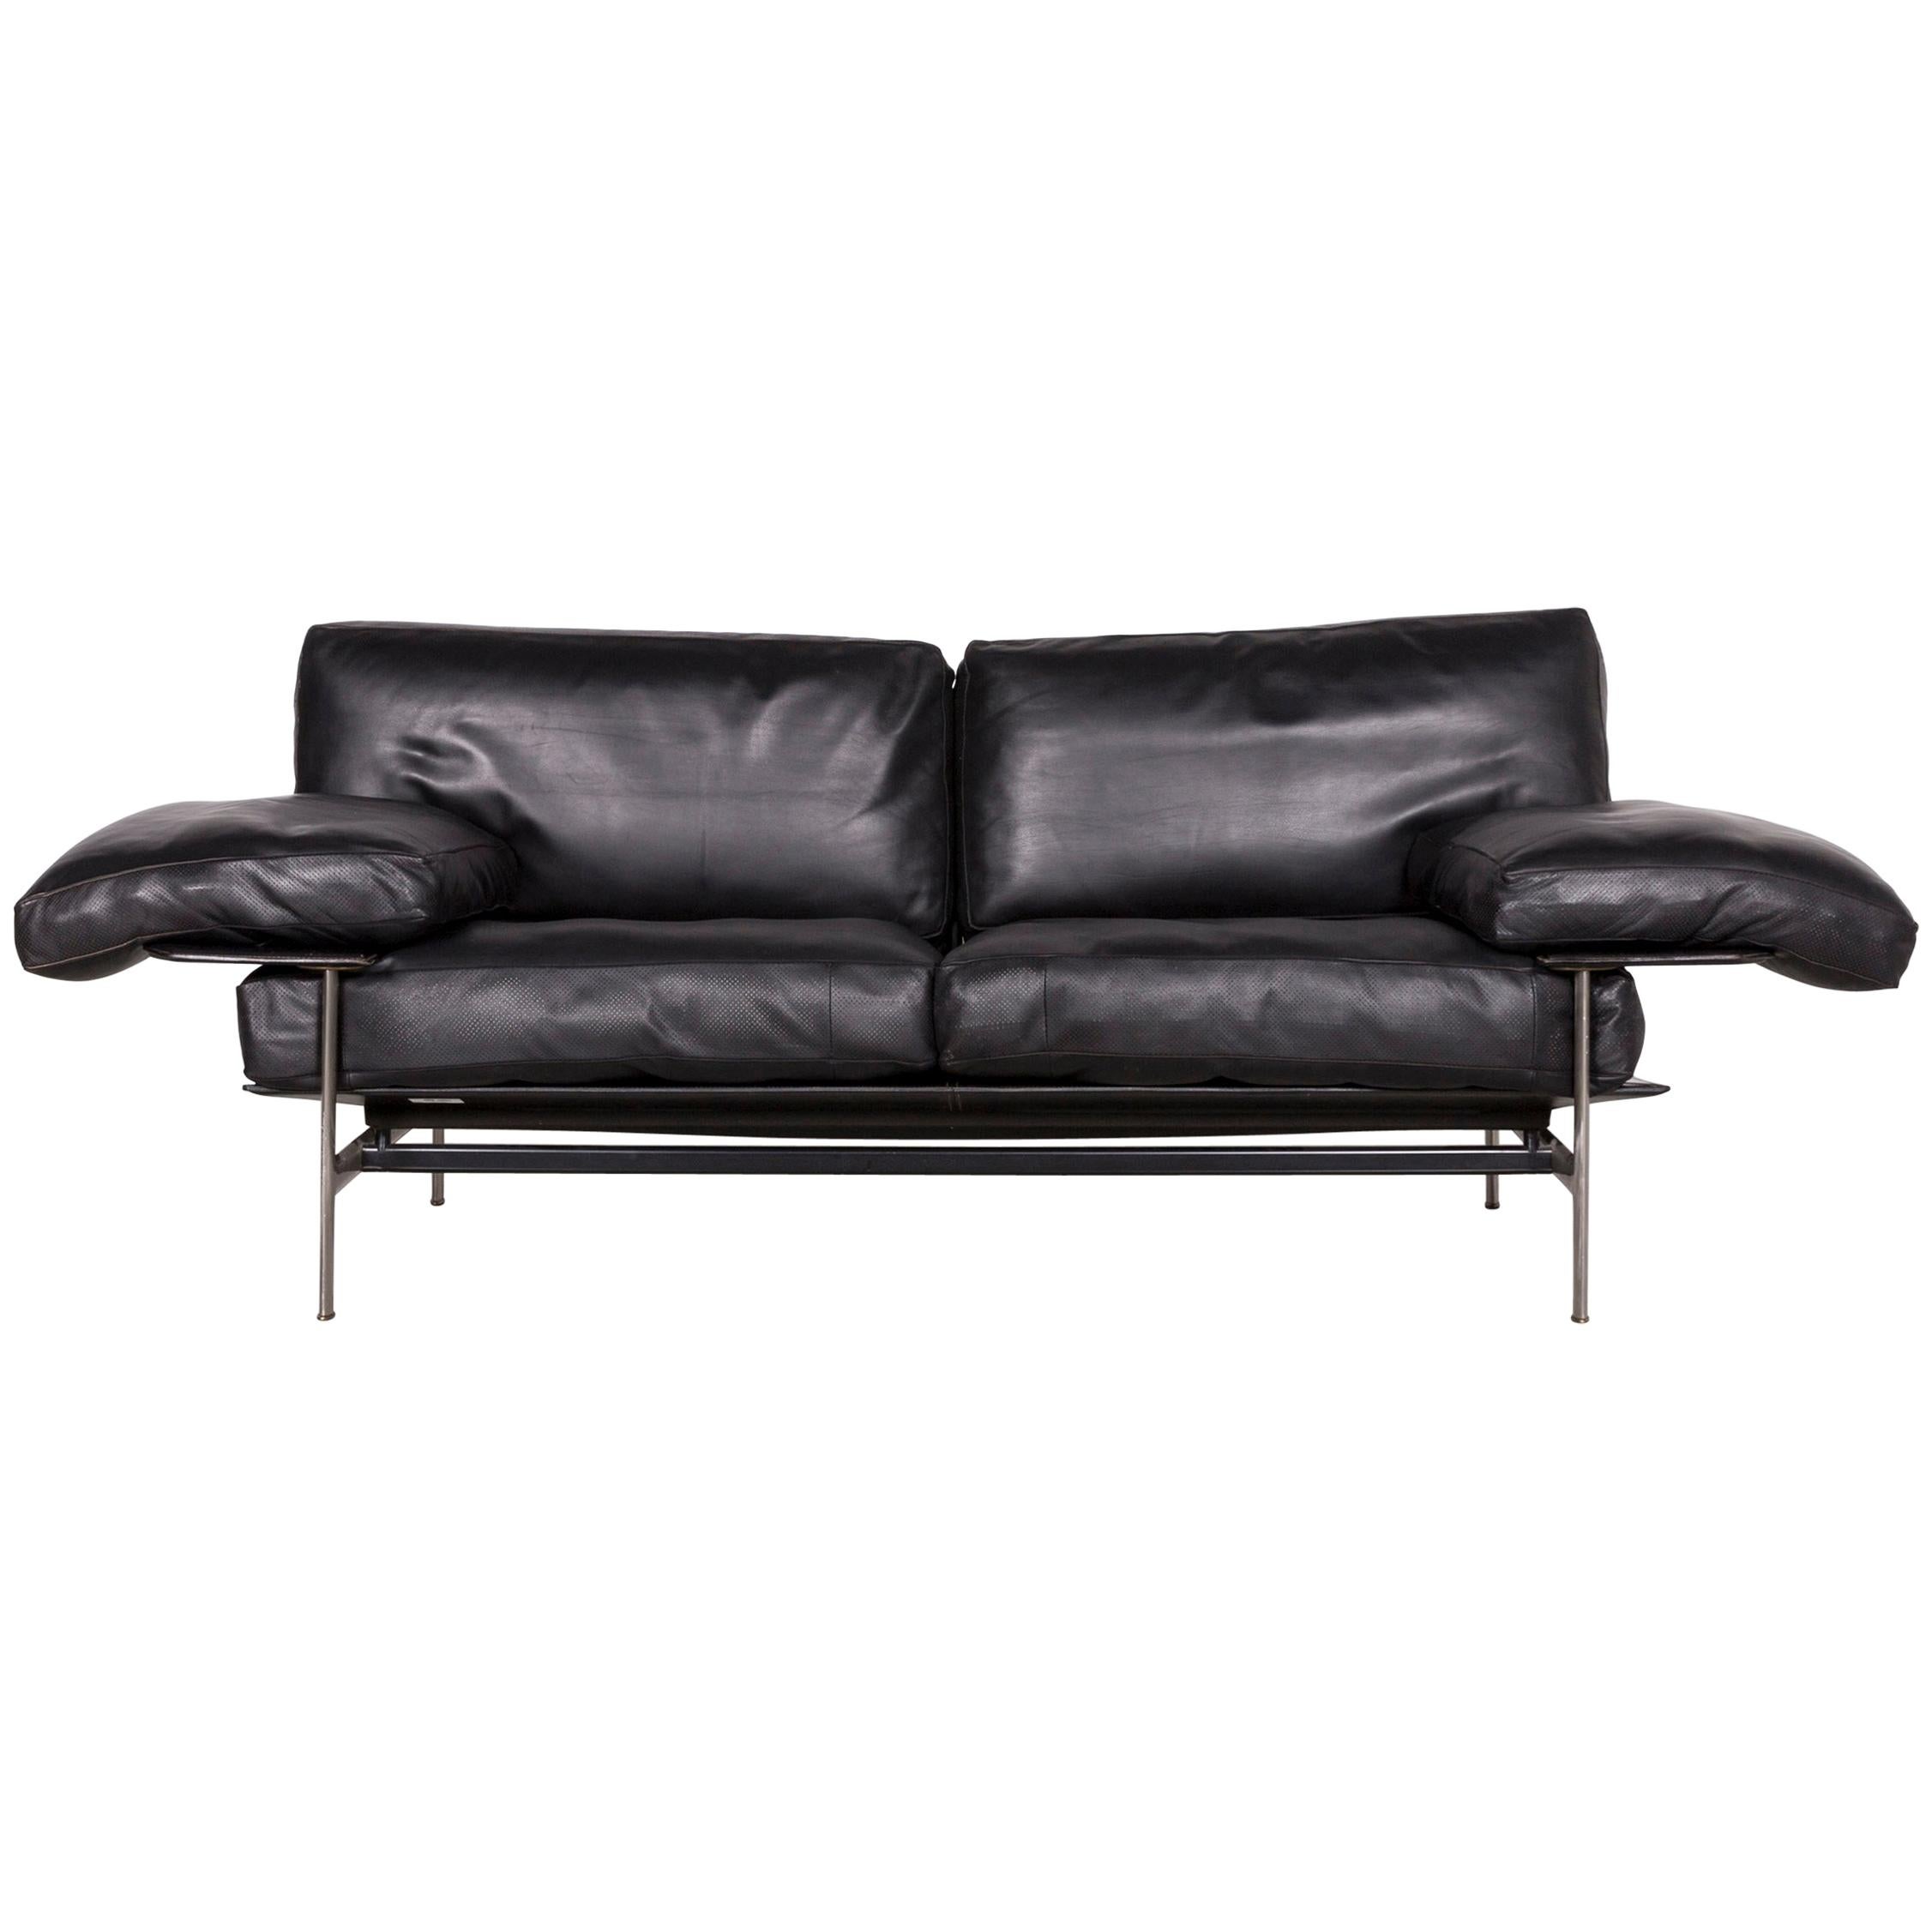 B&B Italia Diesis Designer Sofa Leather Black Three-Seat Couch Modern For Sale